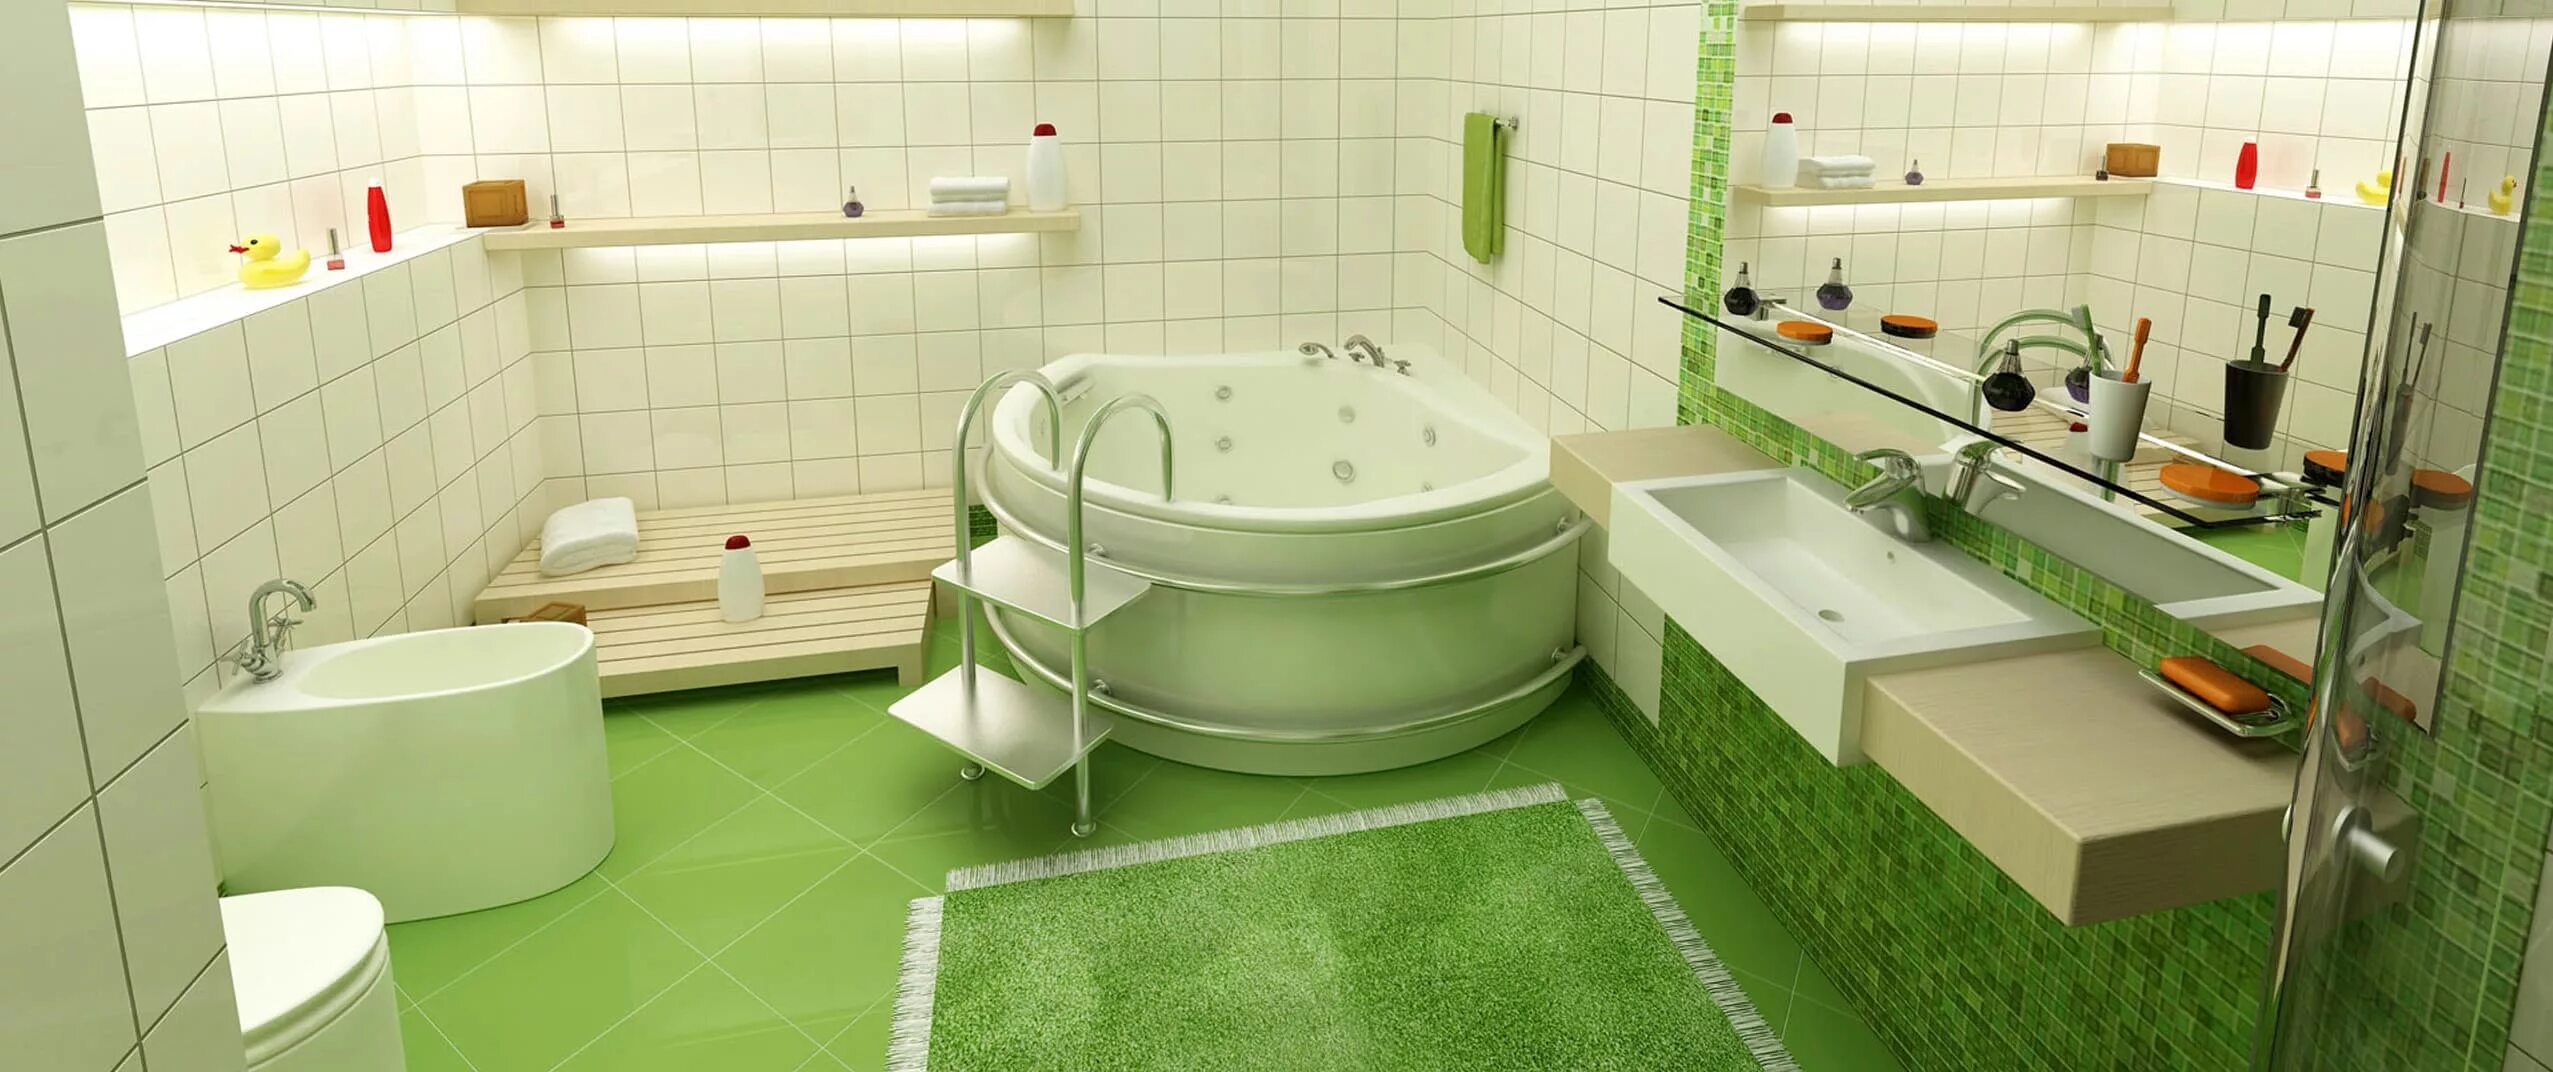 Ремонт ванны челябинск. Ванная комната. Дизайн ванной комнаты. Ванная после ремонта. Панорама ванной комнаты.